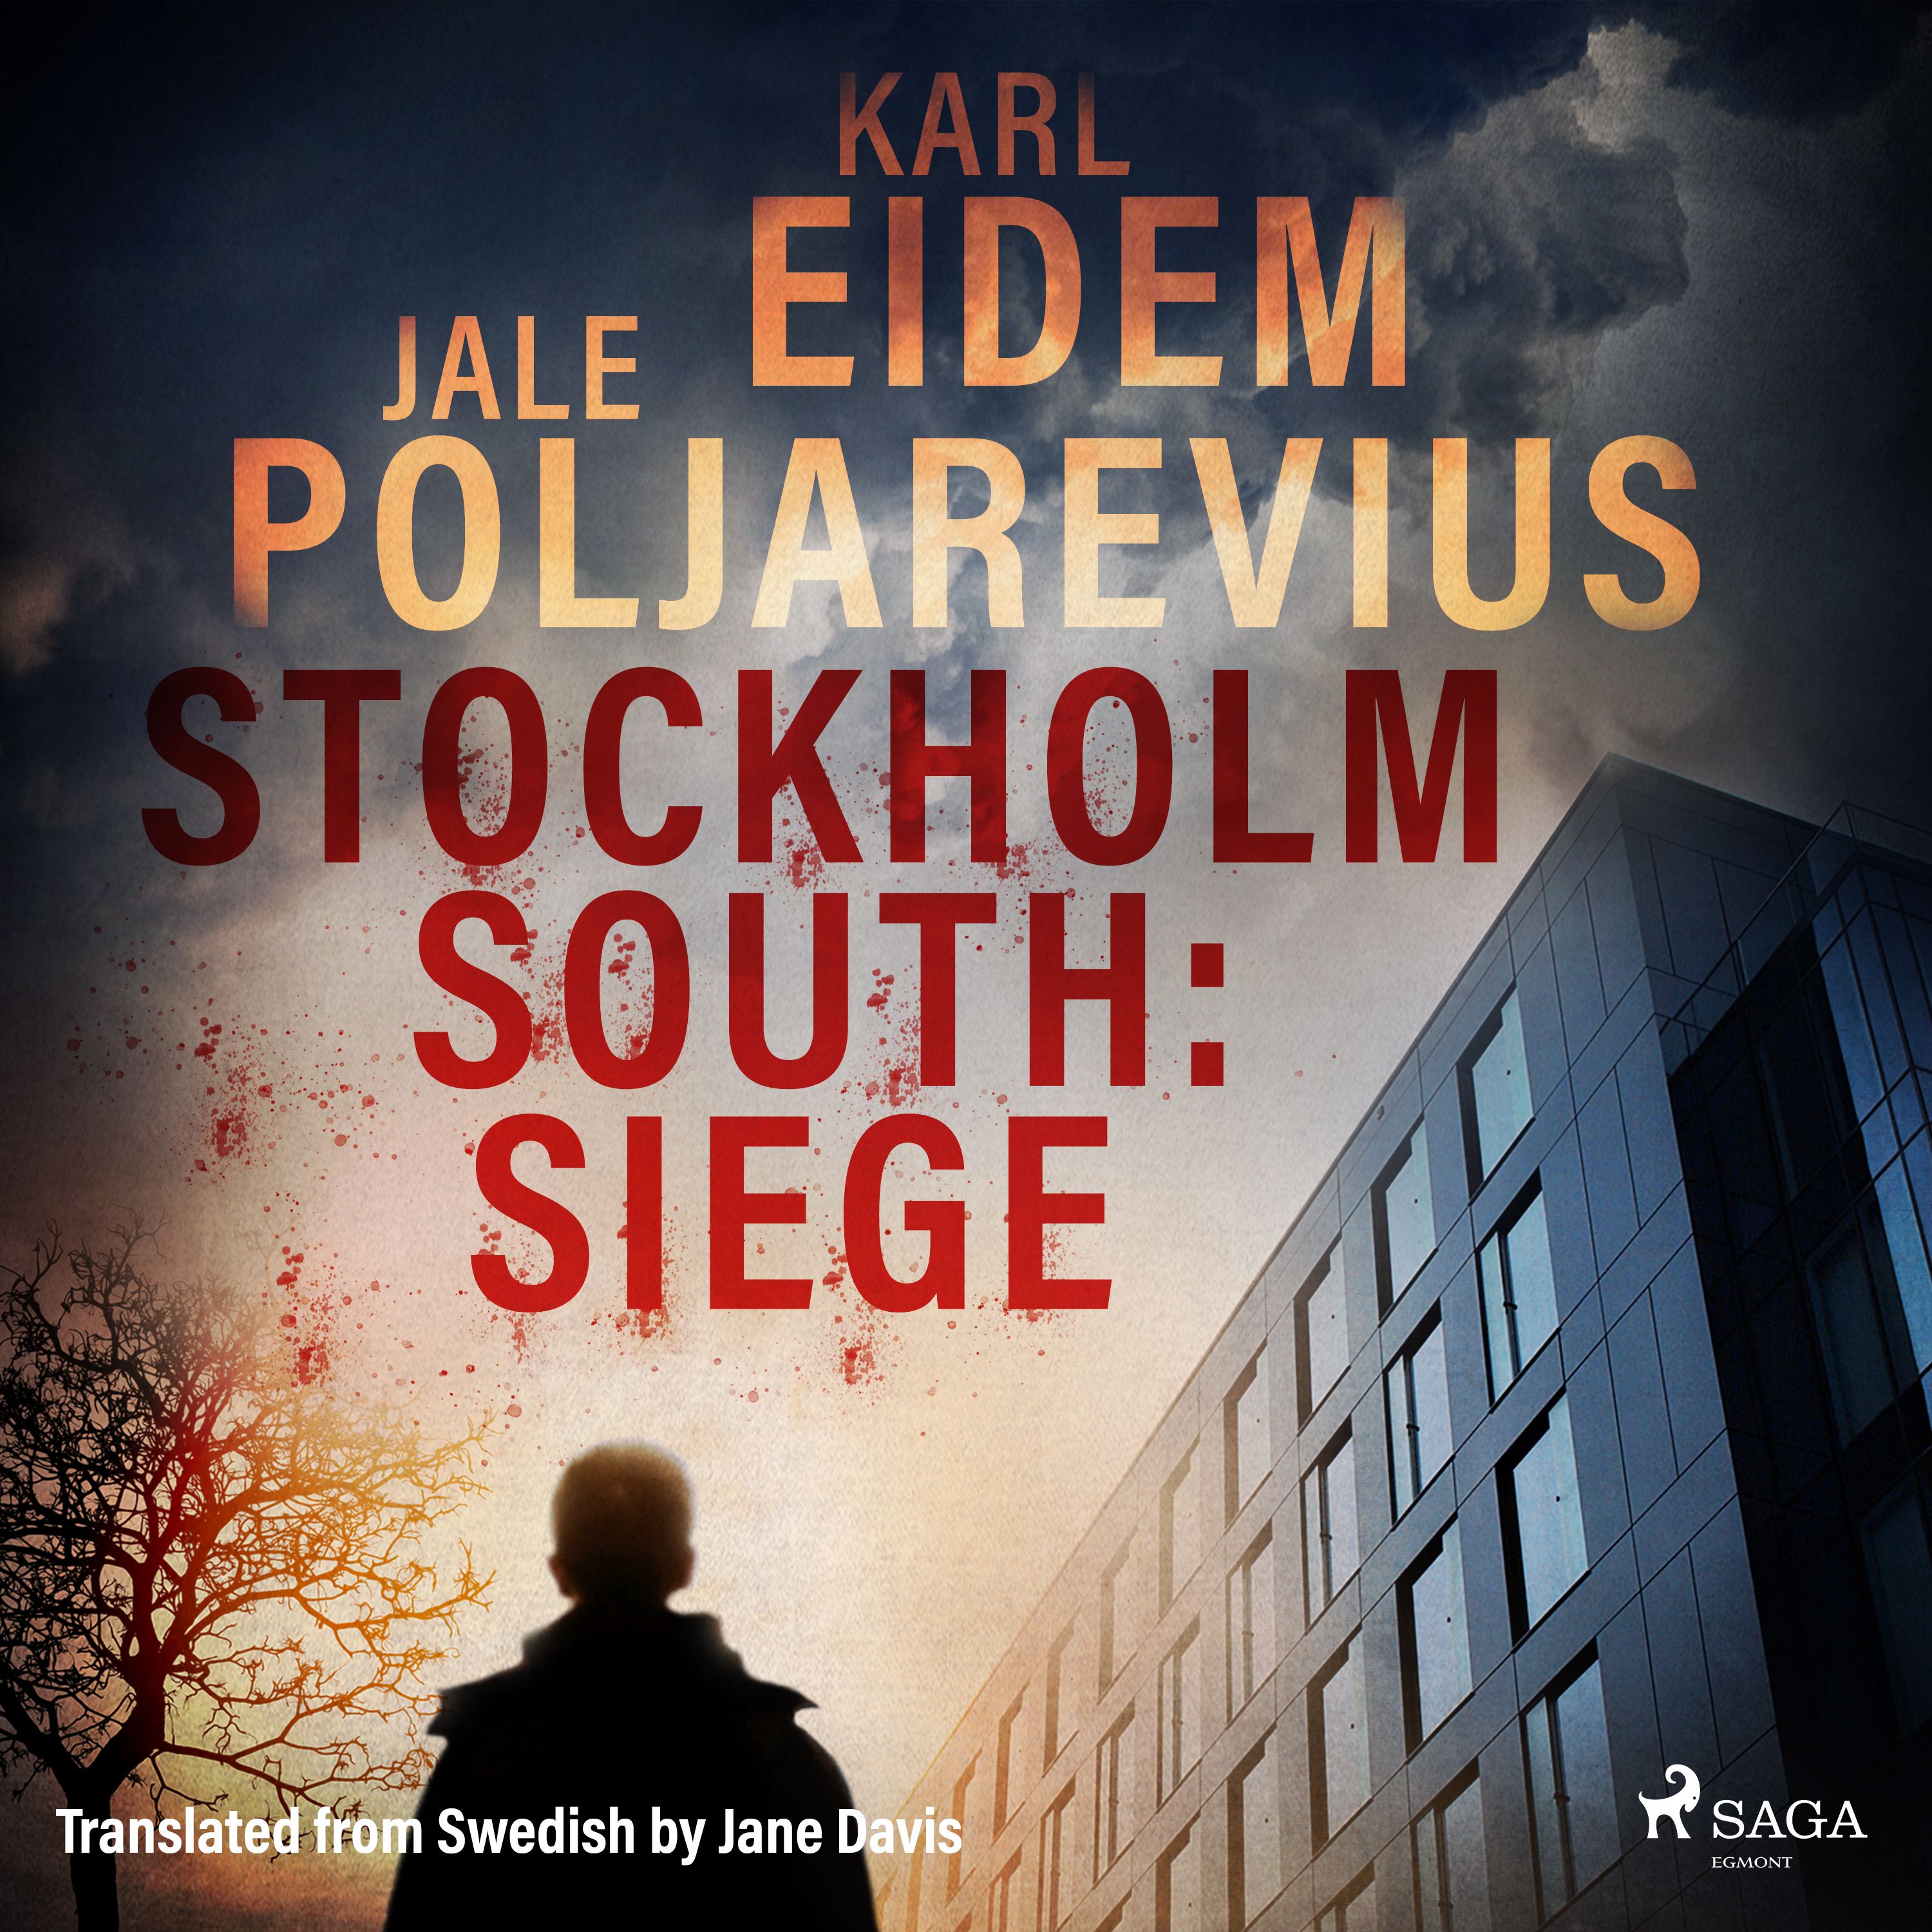 Stockholm South: Siege, audiobook by Karl Eidem, Jale Poljarevius